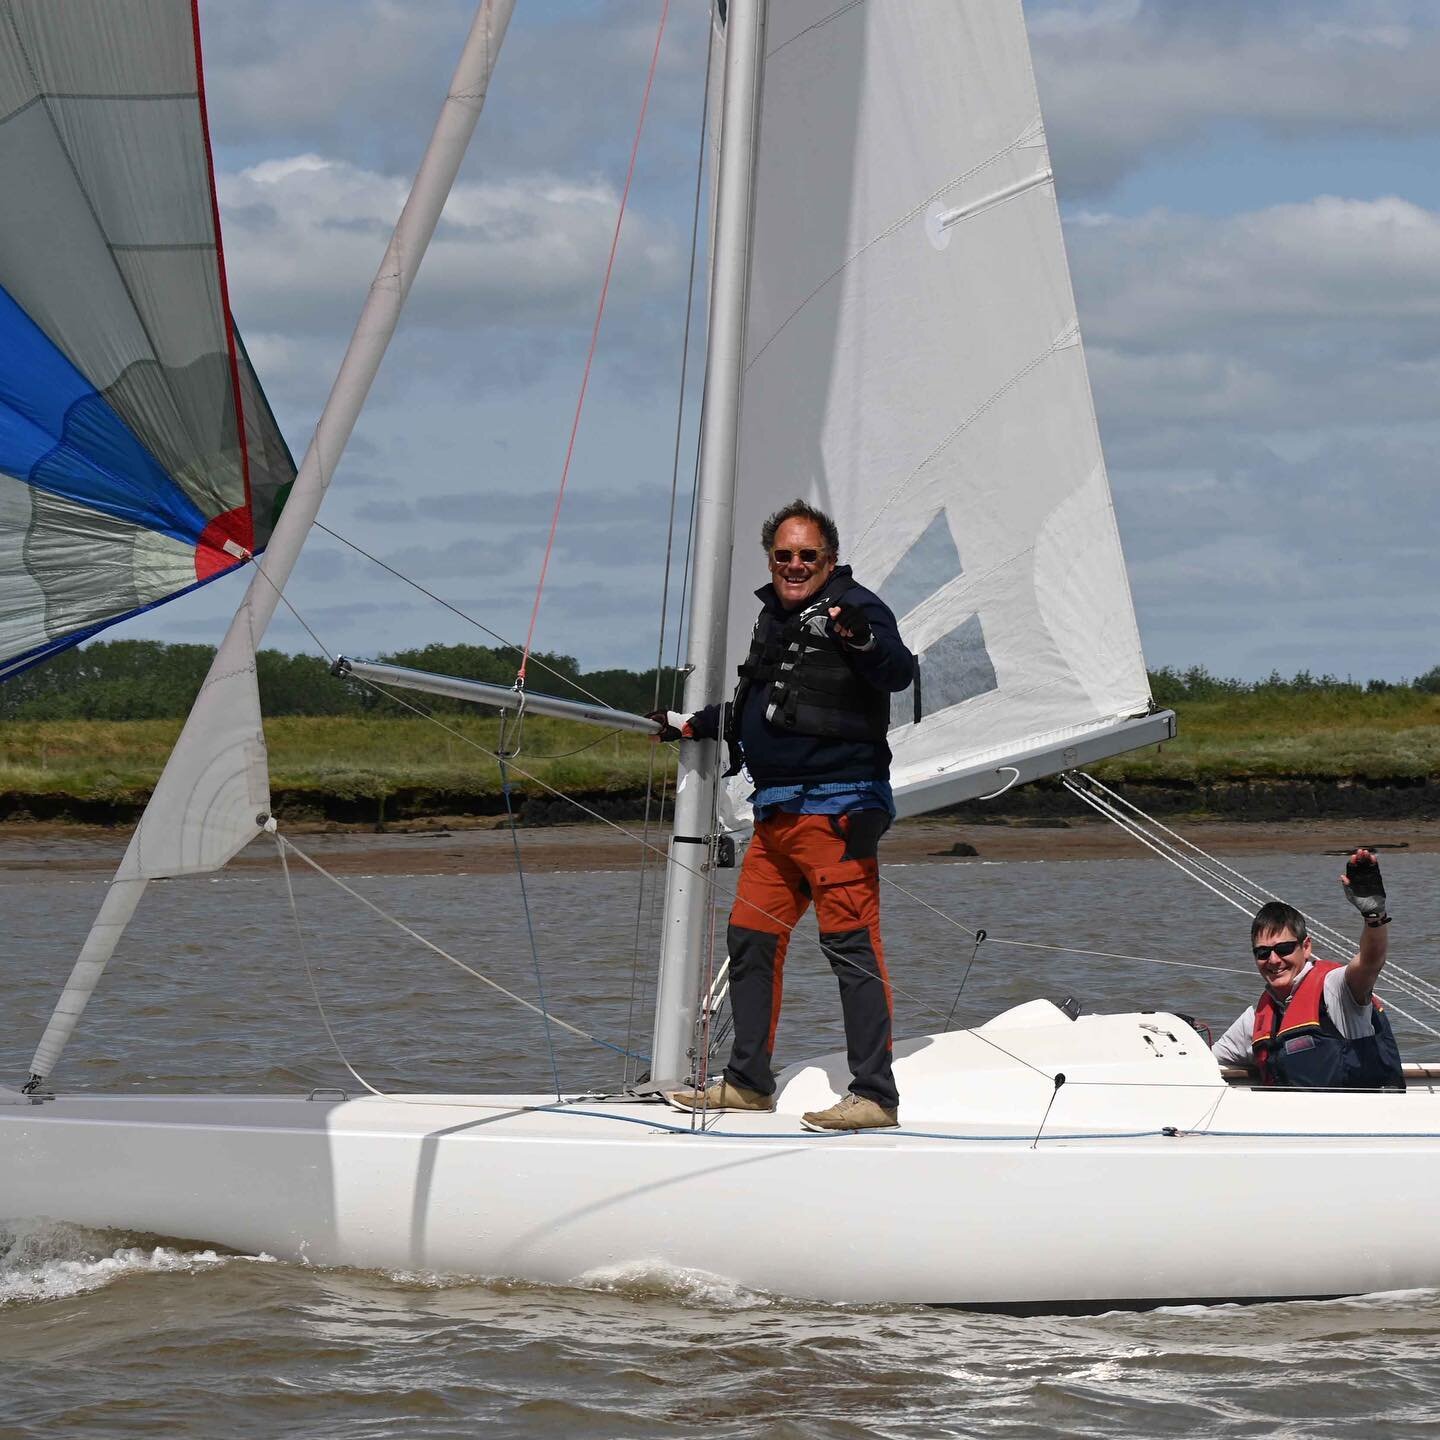 Steve is sailing in Aldeburgh this week, back next week. 👓 ⛵️ 👓 #sailing #aldeburgh #riveralde #dragon #sailboats #sail #optician #opticianlife #cutlerandgross #suffolksailing